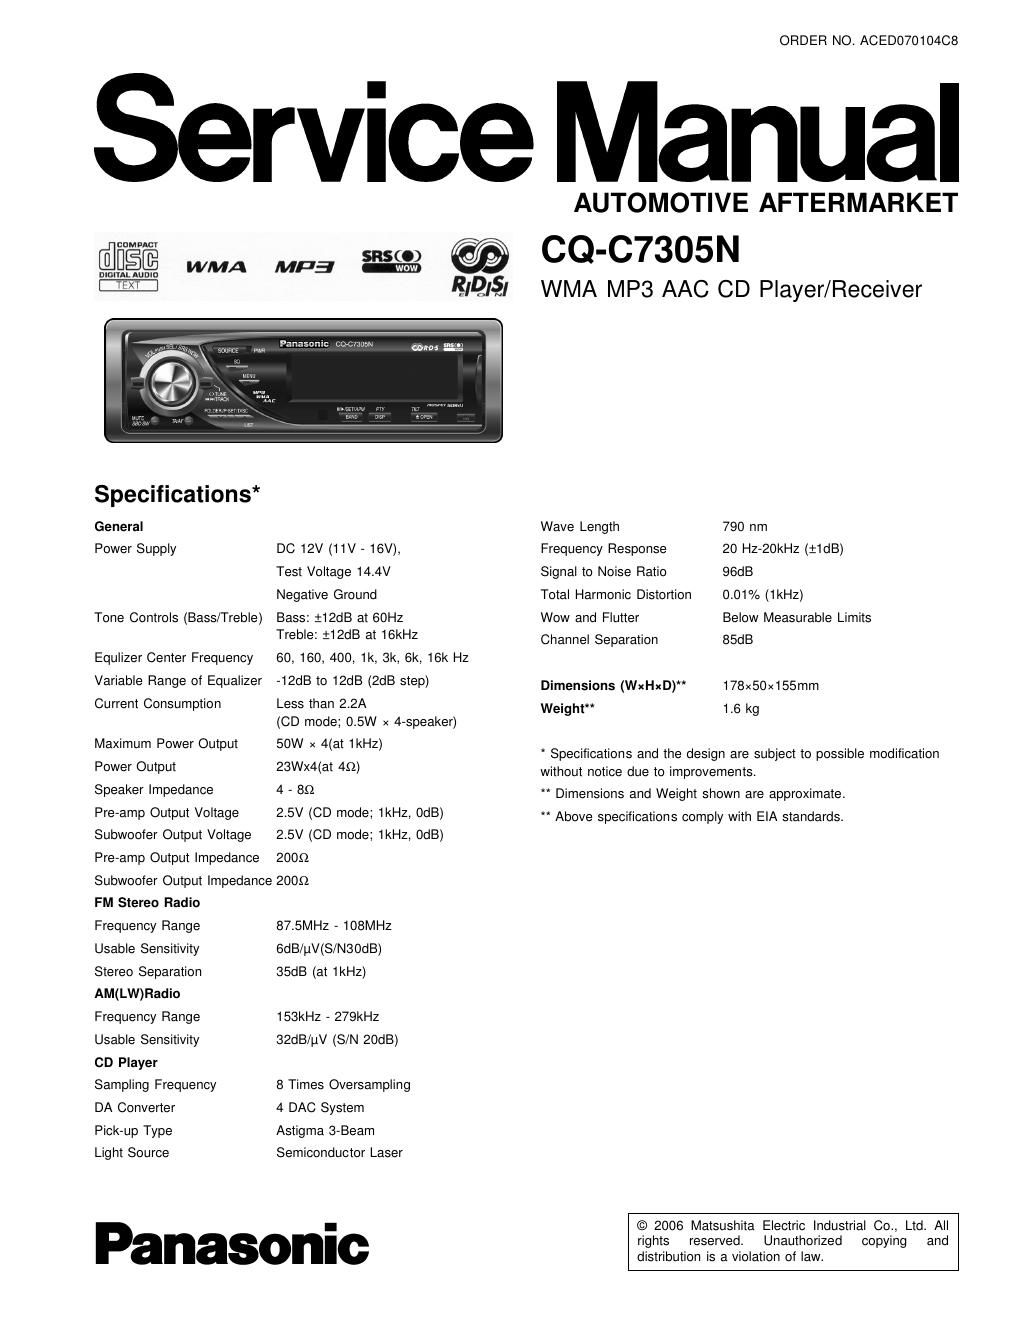 panasonic cq c 7305 n service manual